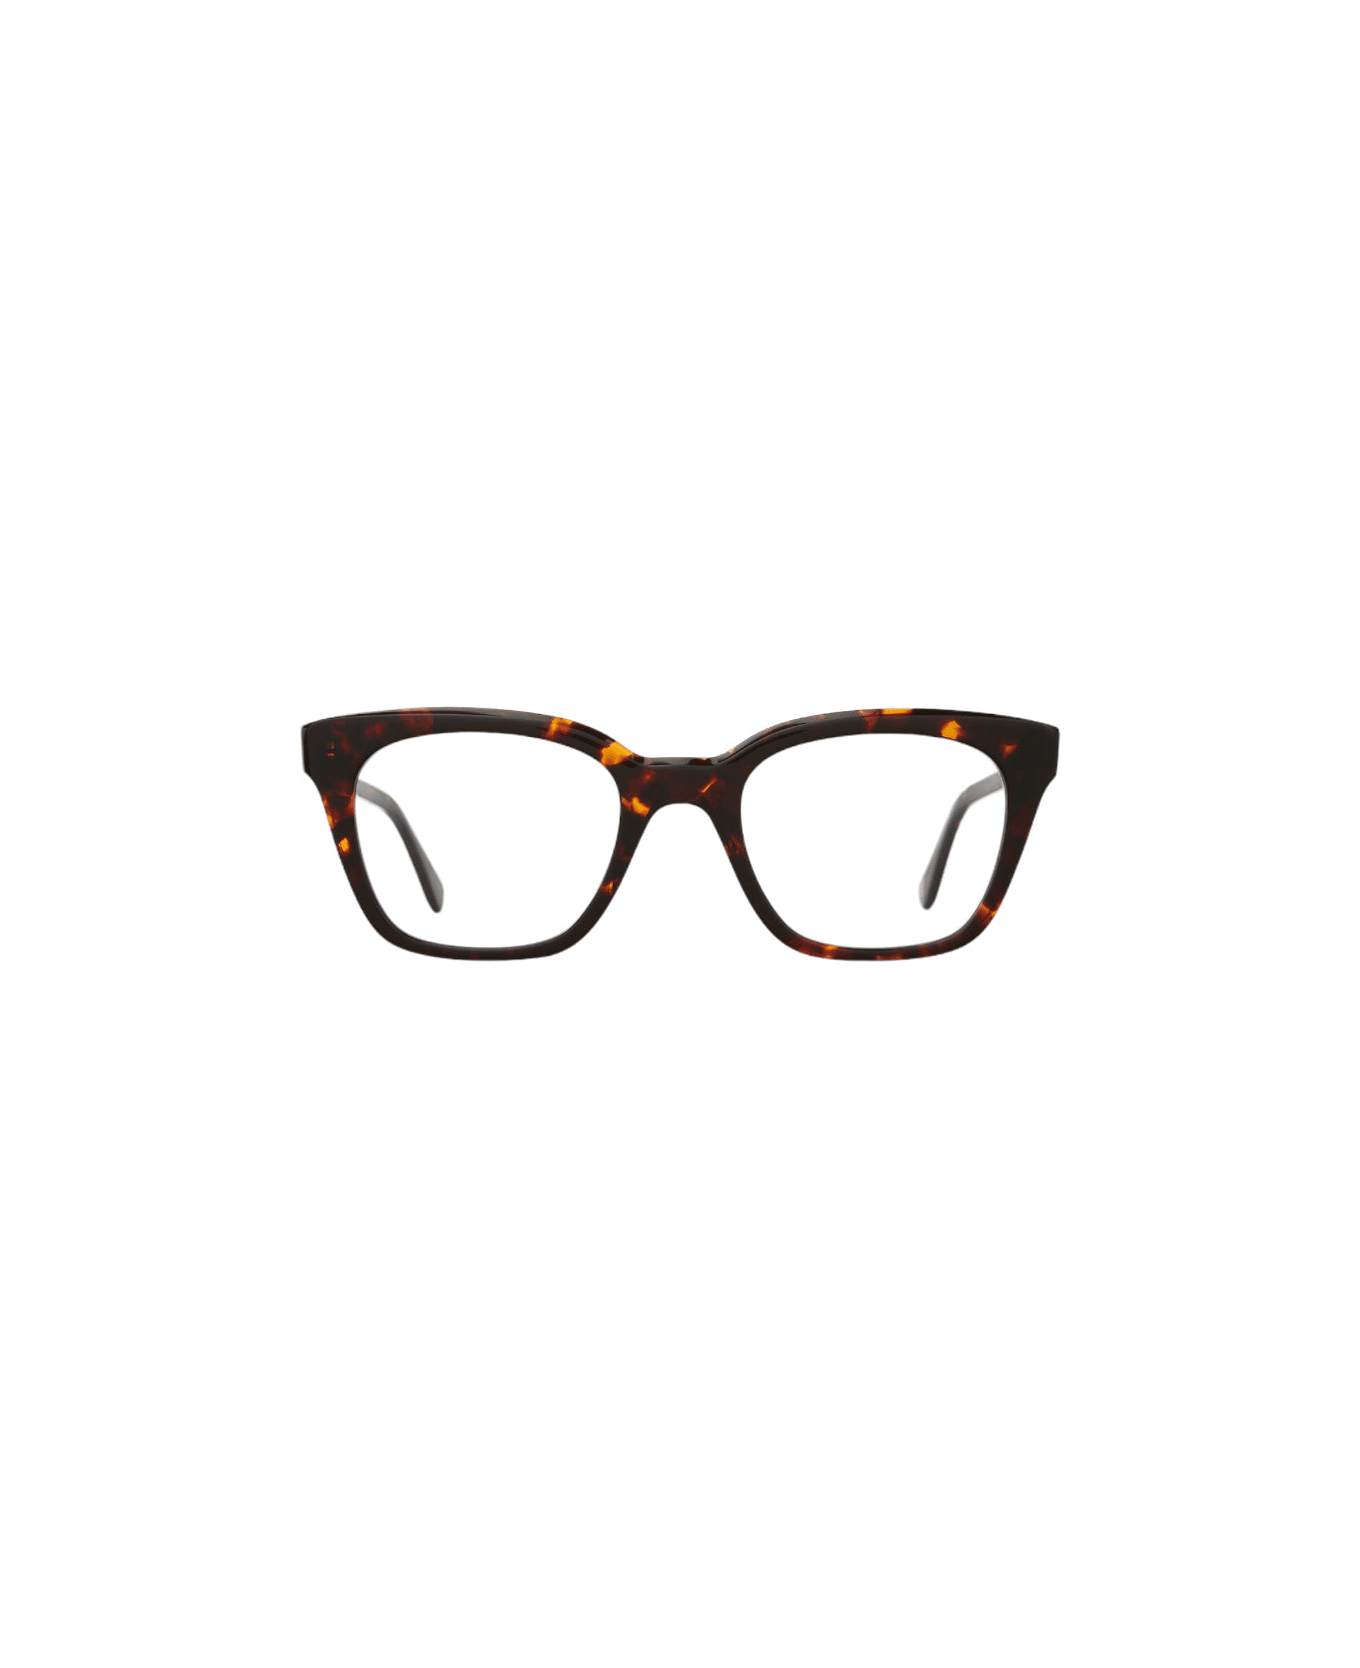 Garrett Leight El Rey - Caviar Tortoise Glasses